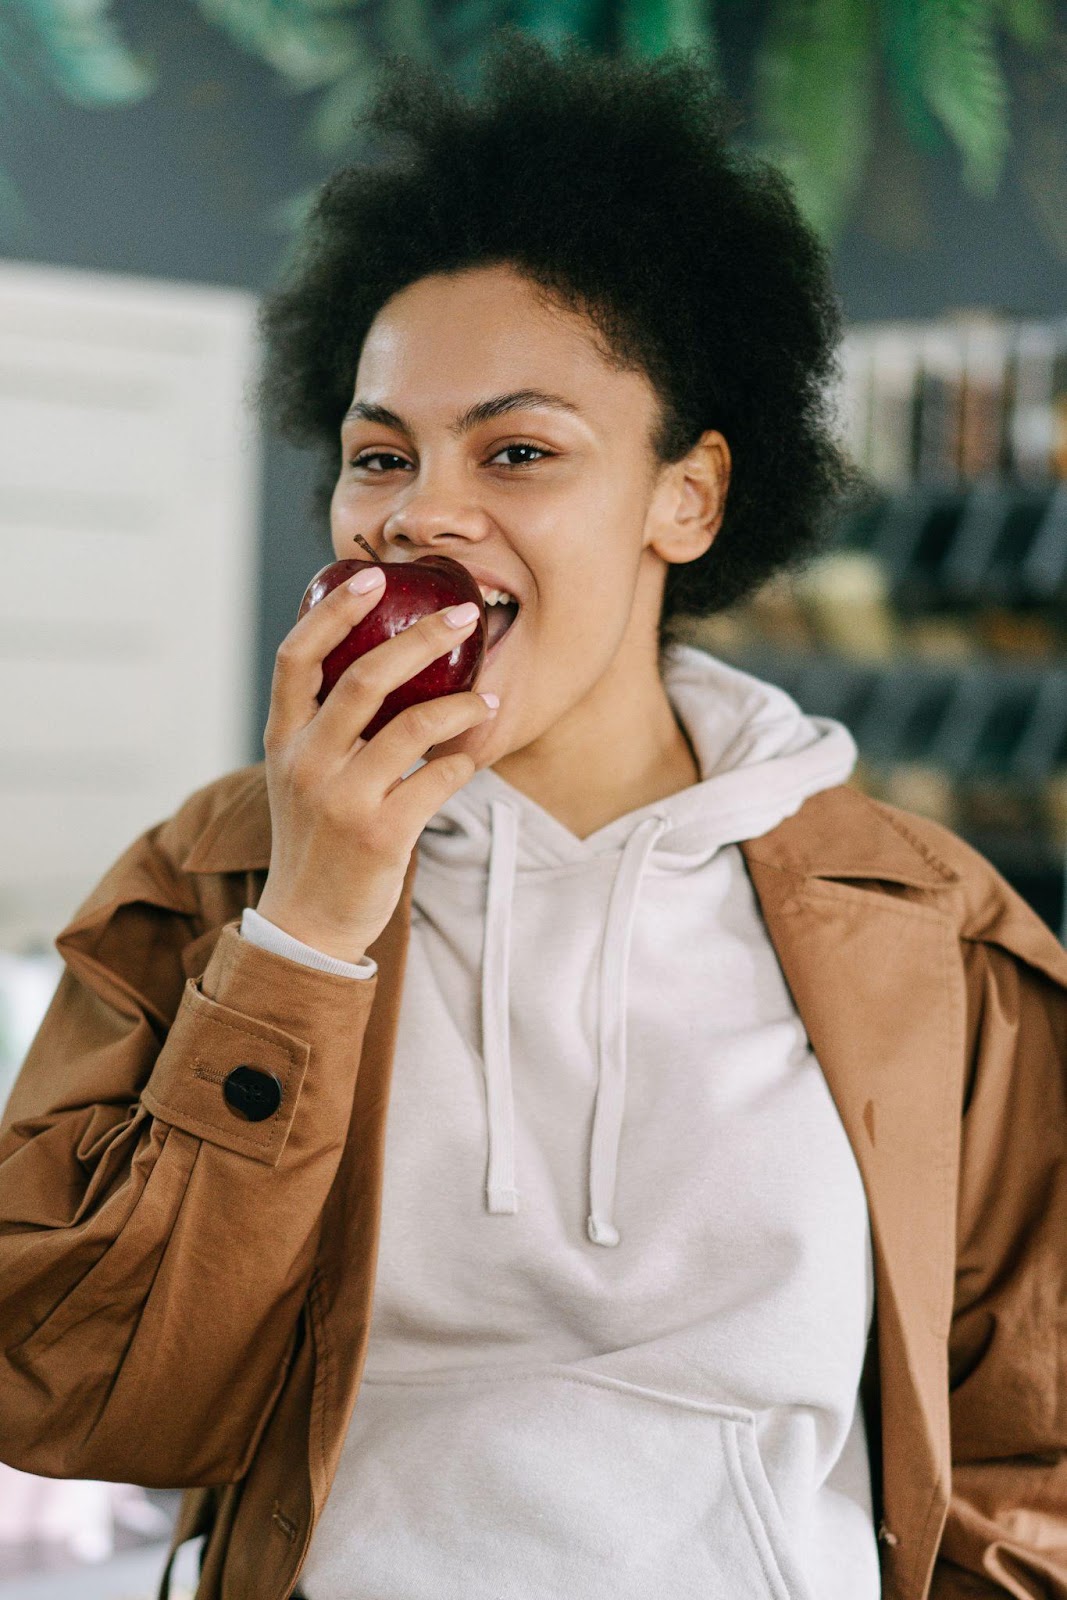 A girl munching on an apple